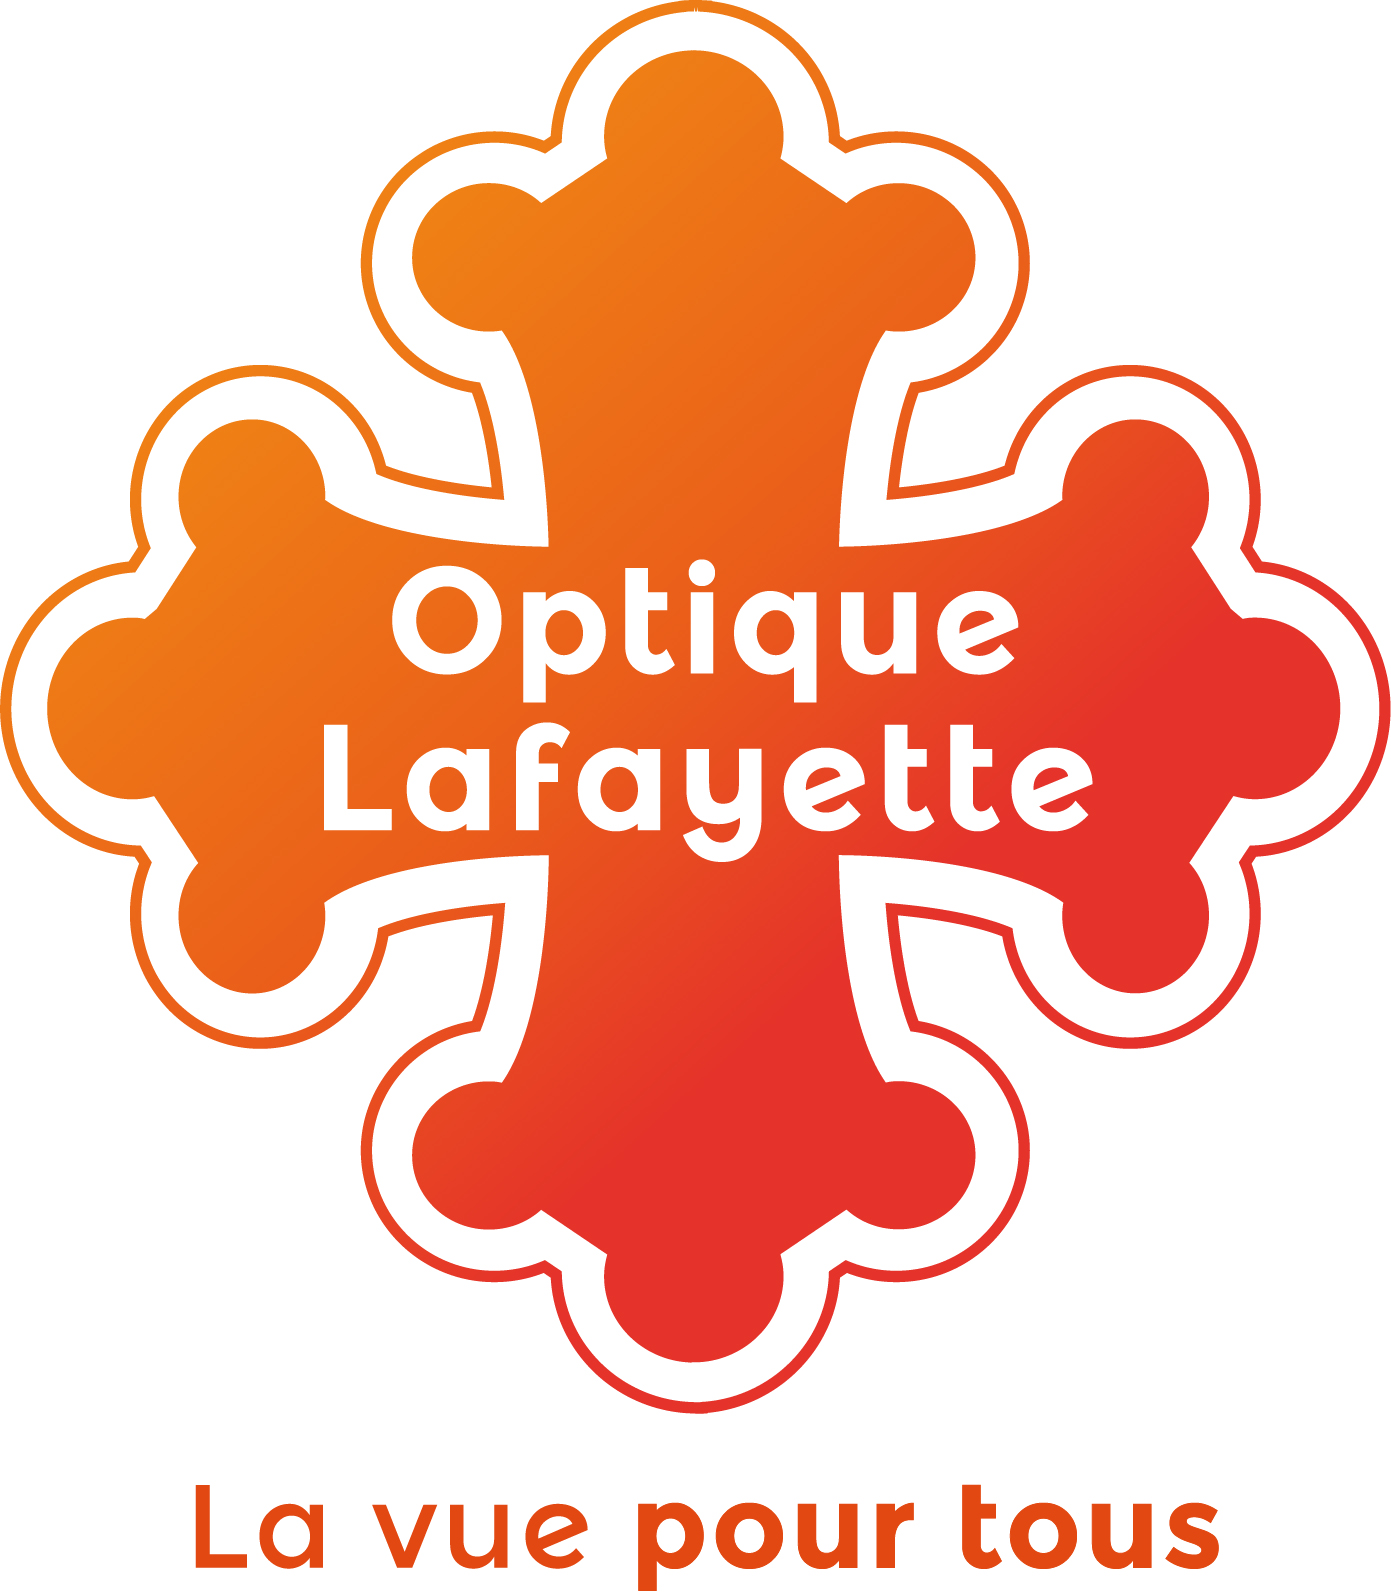 Optique Lafayette Bergerac